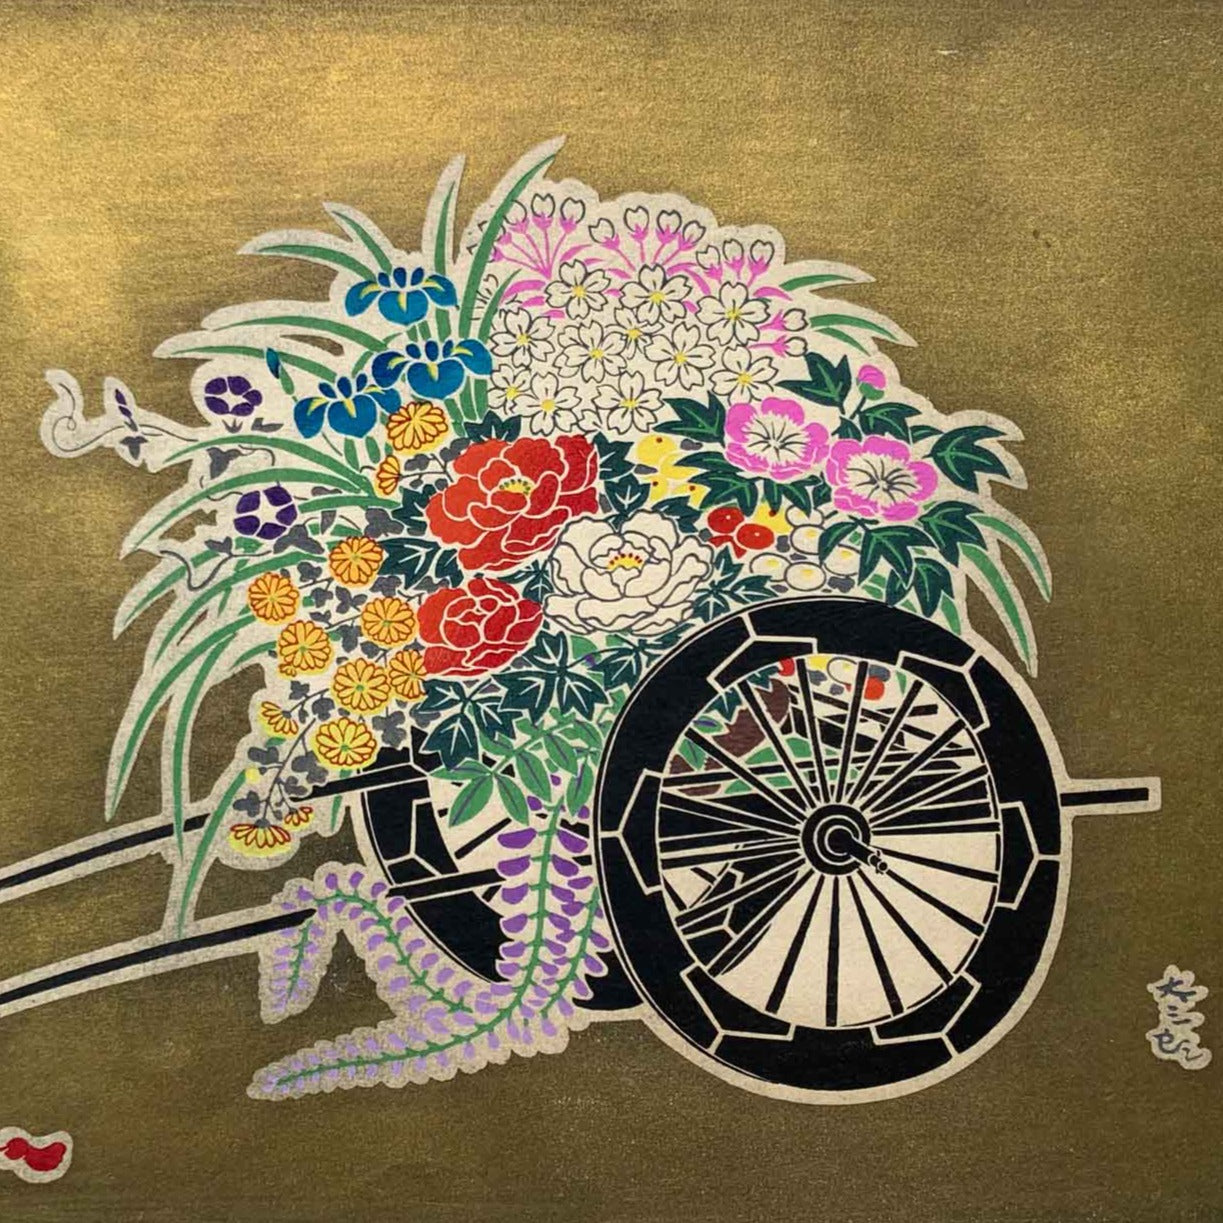 estampe japonaise shin hanga de tasaburo takahashi chariot de fleur printemps , gros plan sur les fleurs